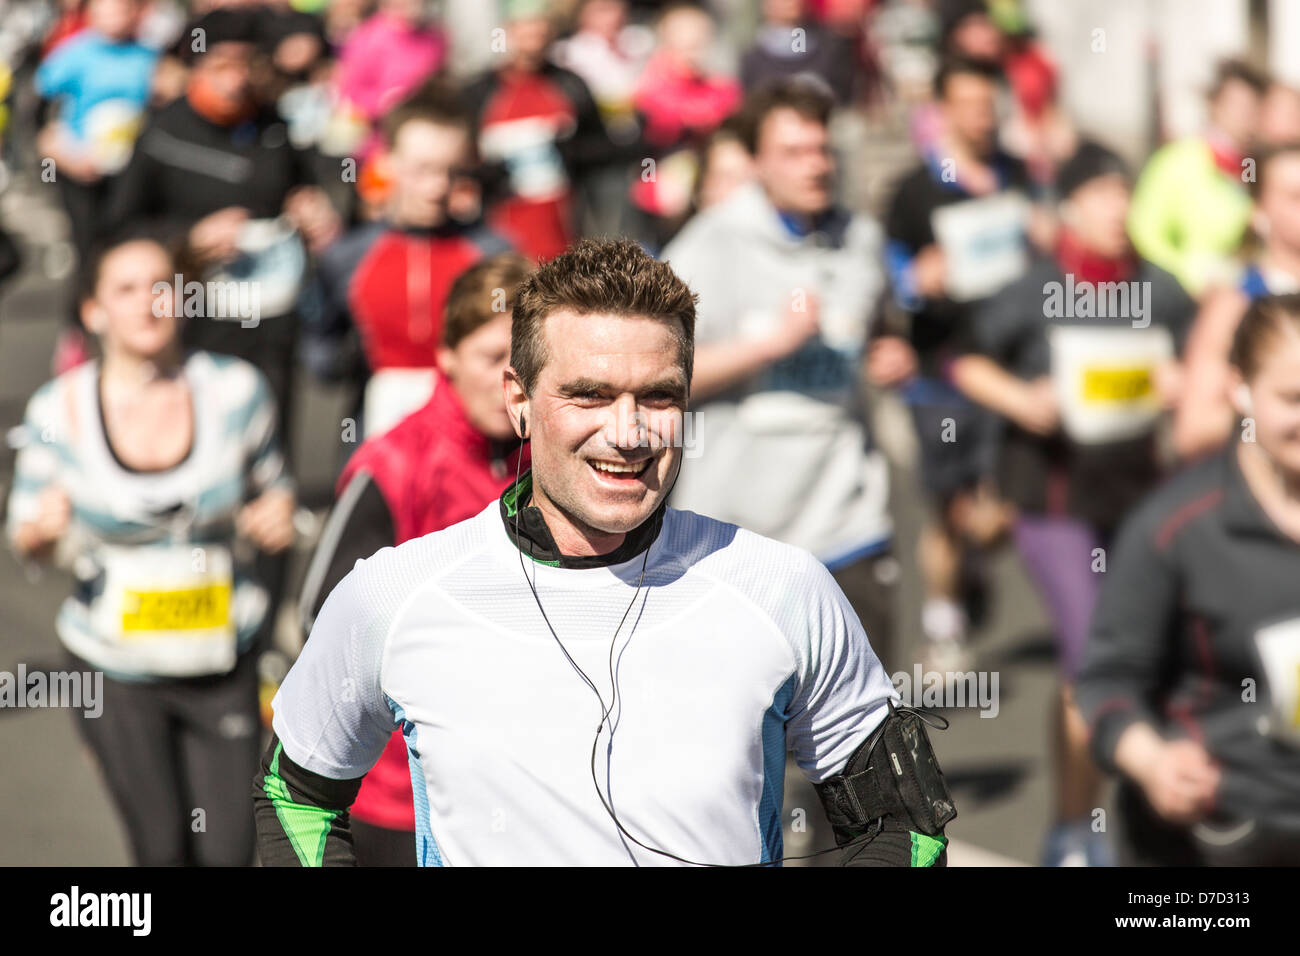 Sportive man in his forties runs a marathon Stock Photo